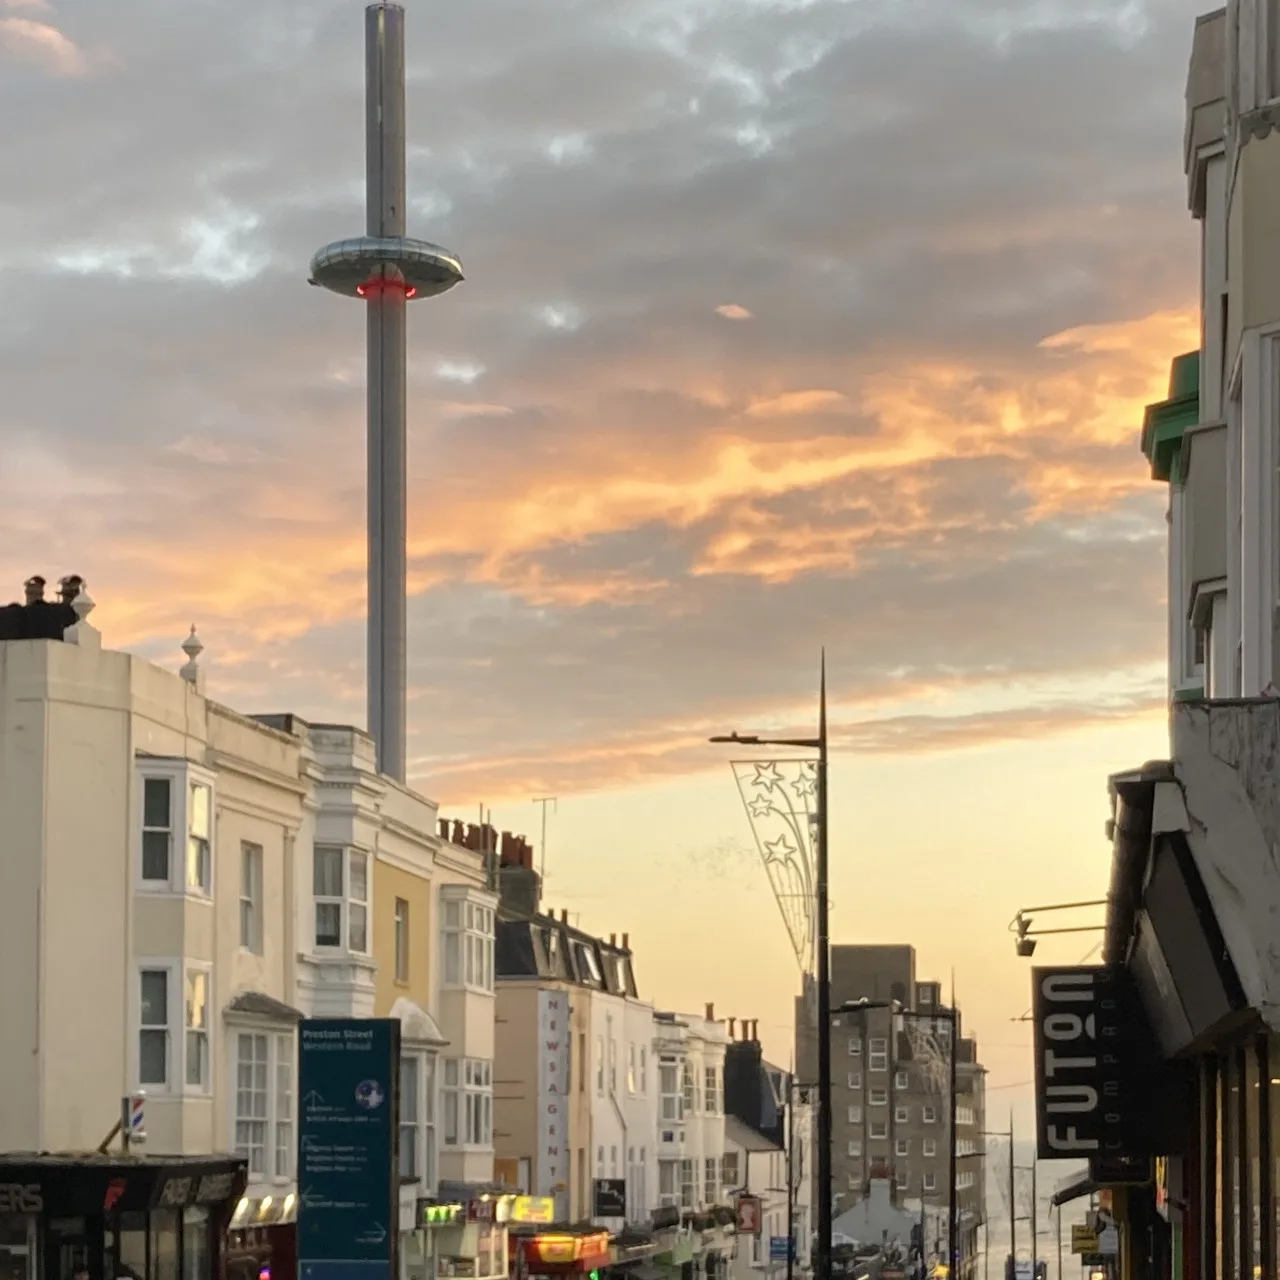 Sunset sky over Preston Street, Brighton with i360 Brighton